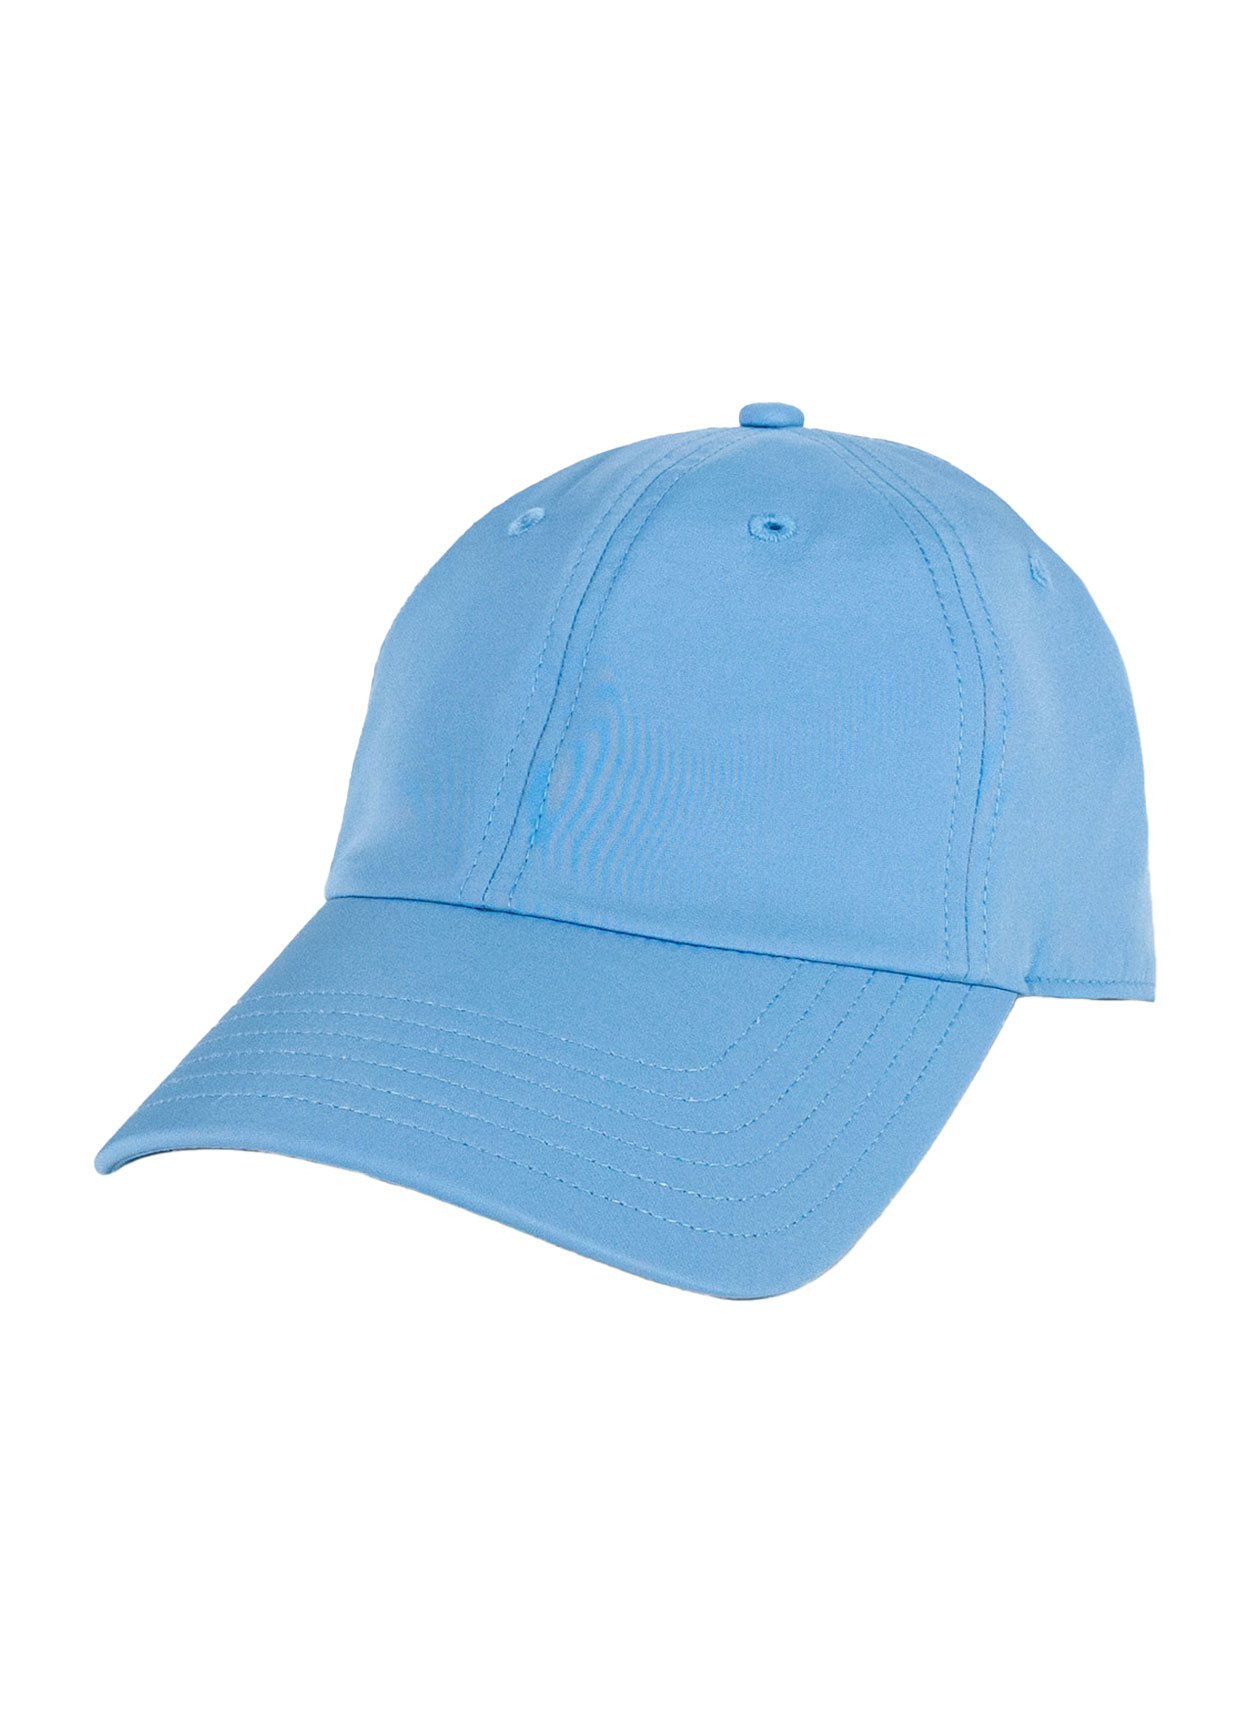 Southern Tide Dusk Blue Performance Hat